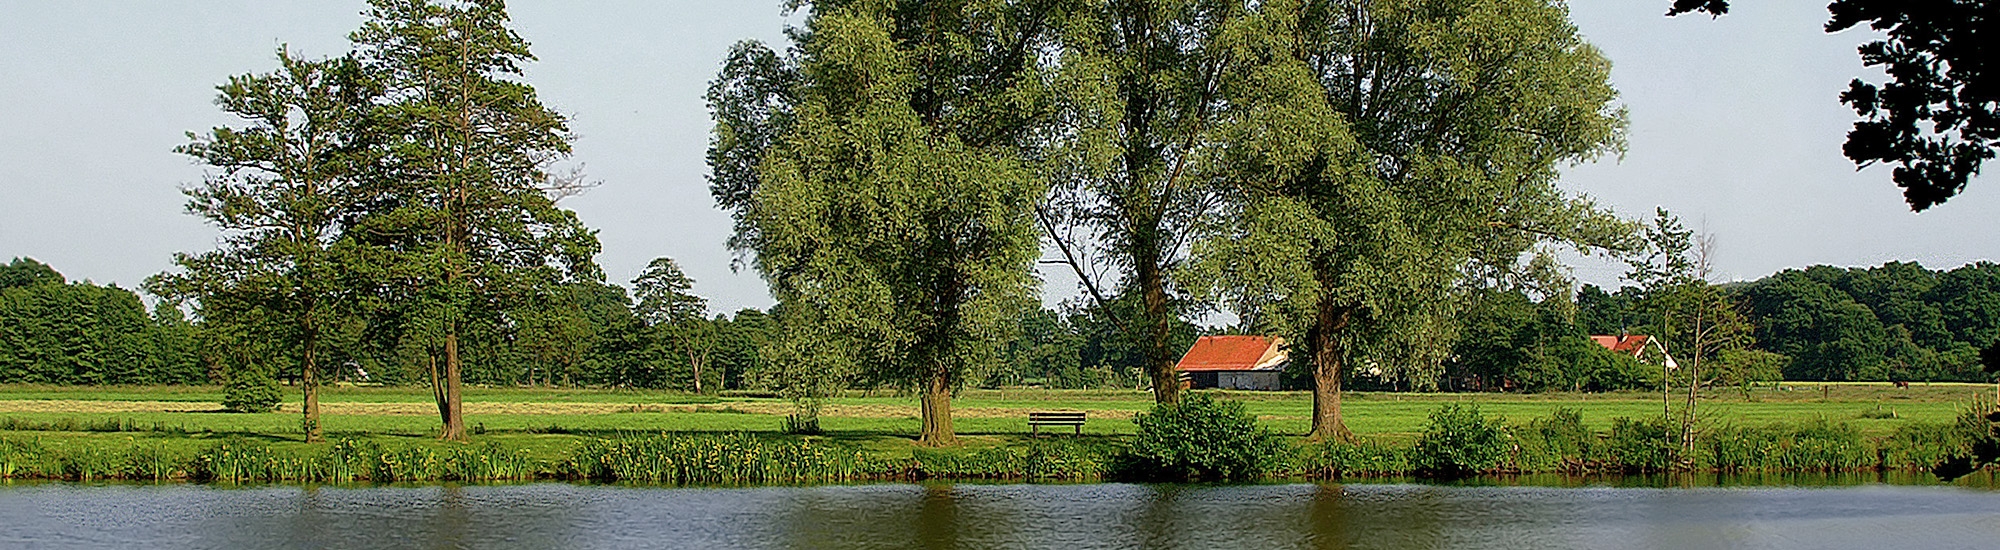 Immobilien Delmenhorst